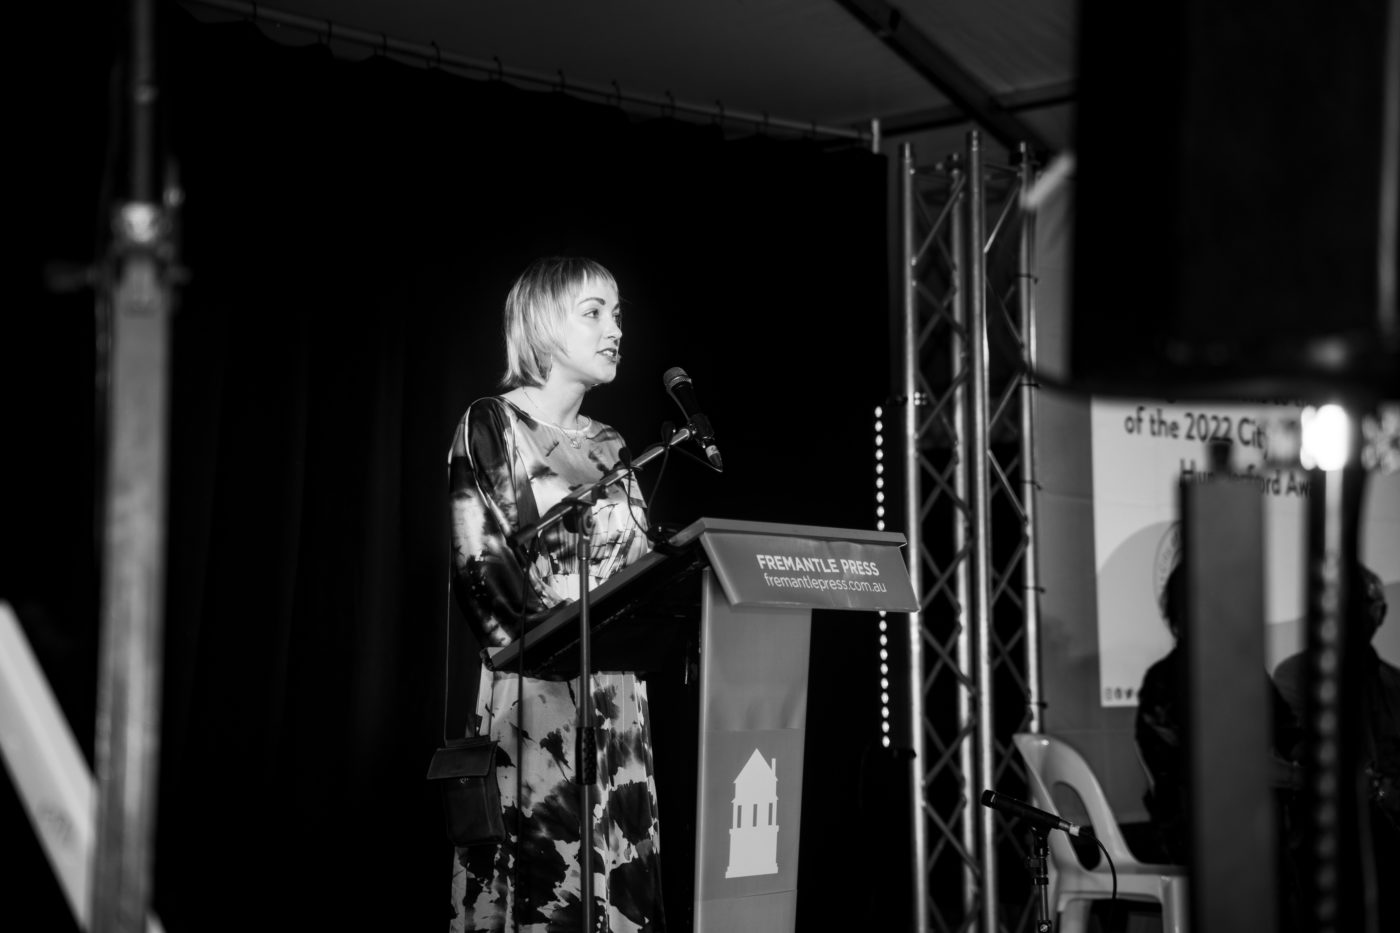 Hungerford Award winner Molly Schmidt on stage giving a speech